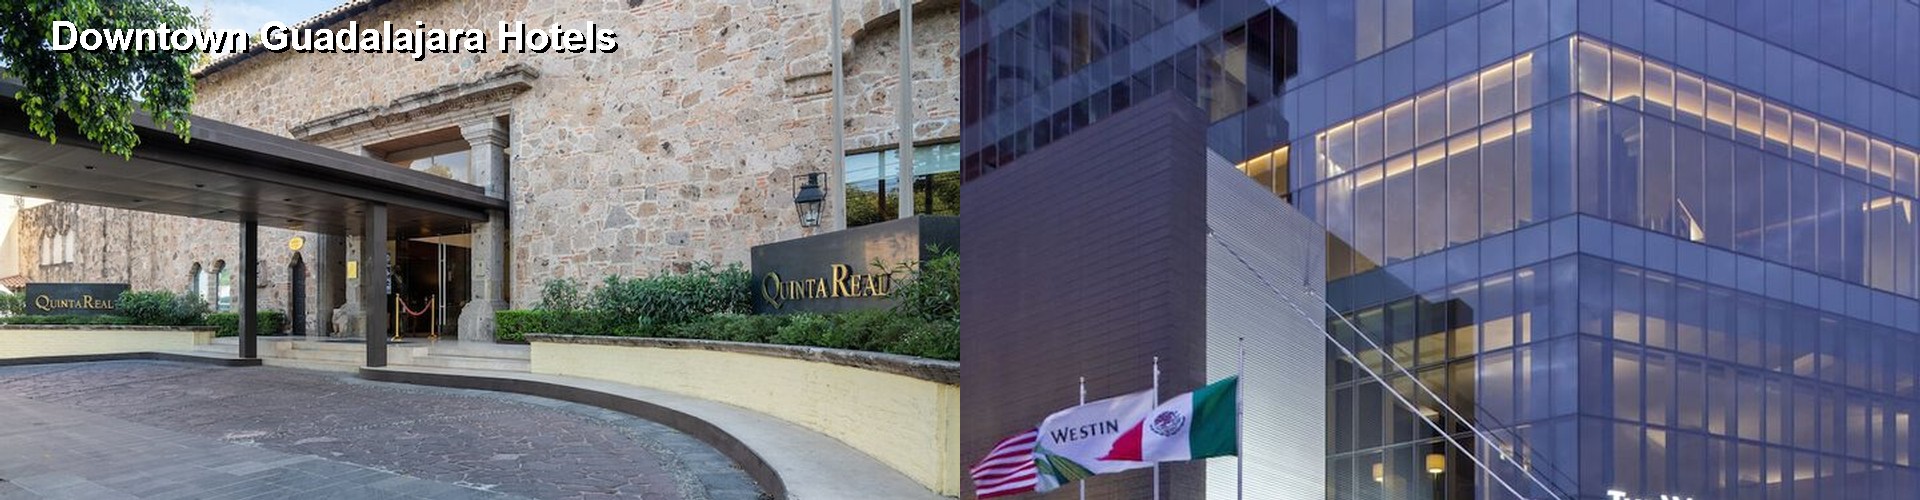 5 Best Hotels near Downtown Guadalajara